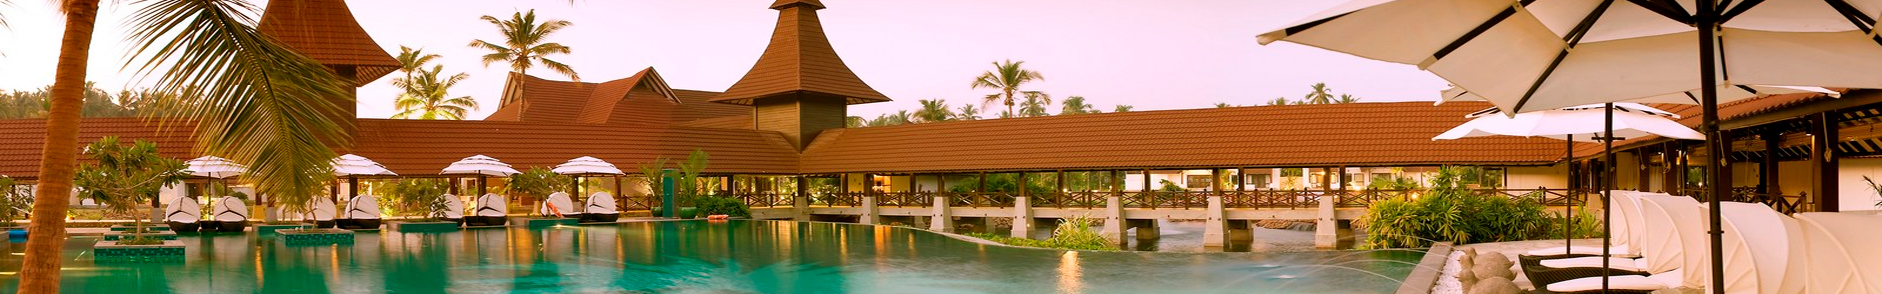 Hotel Bekal Palace, Kerala